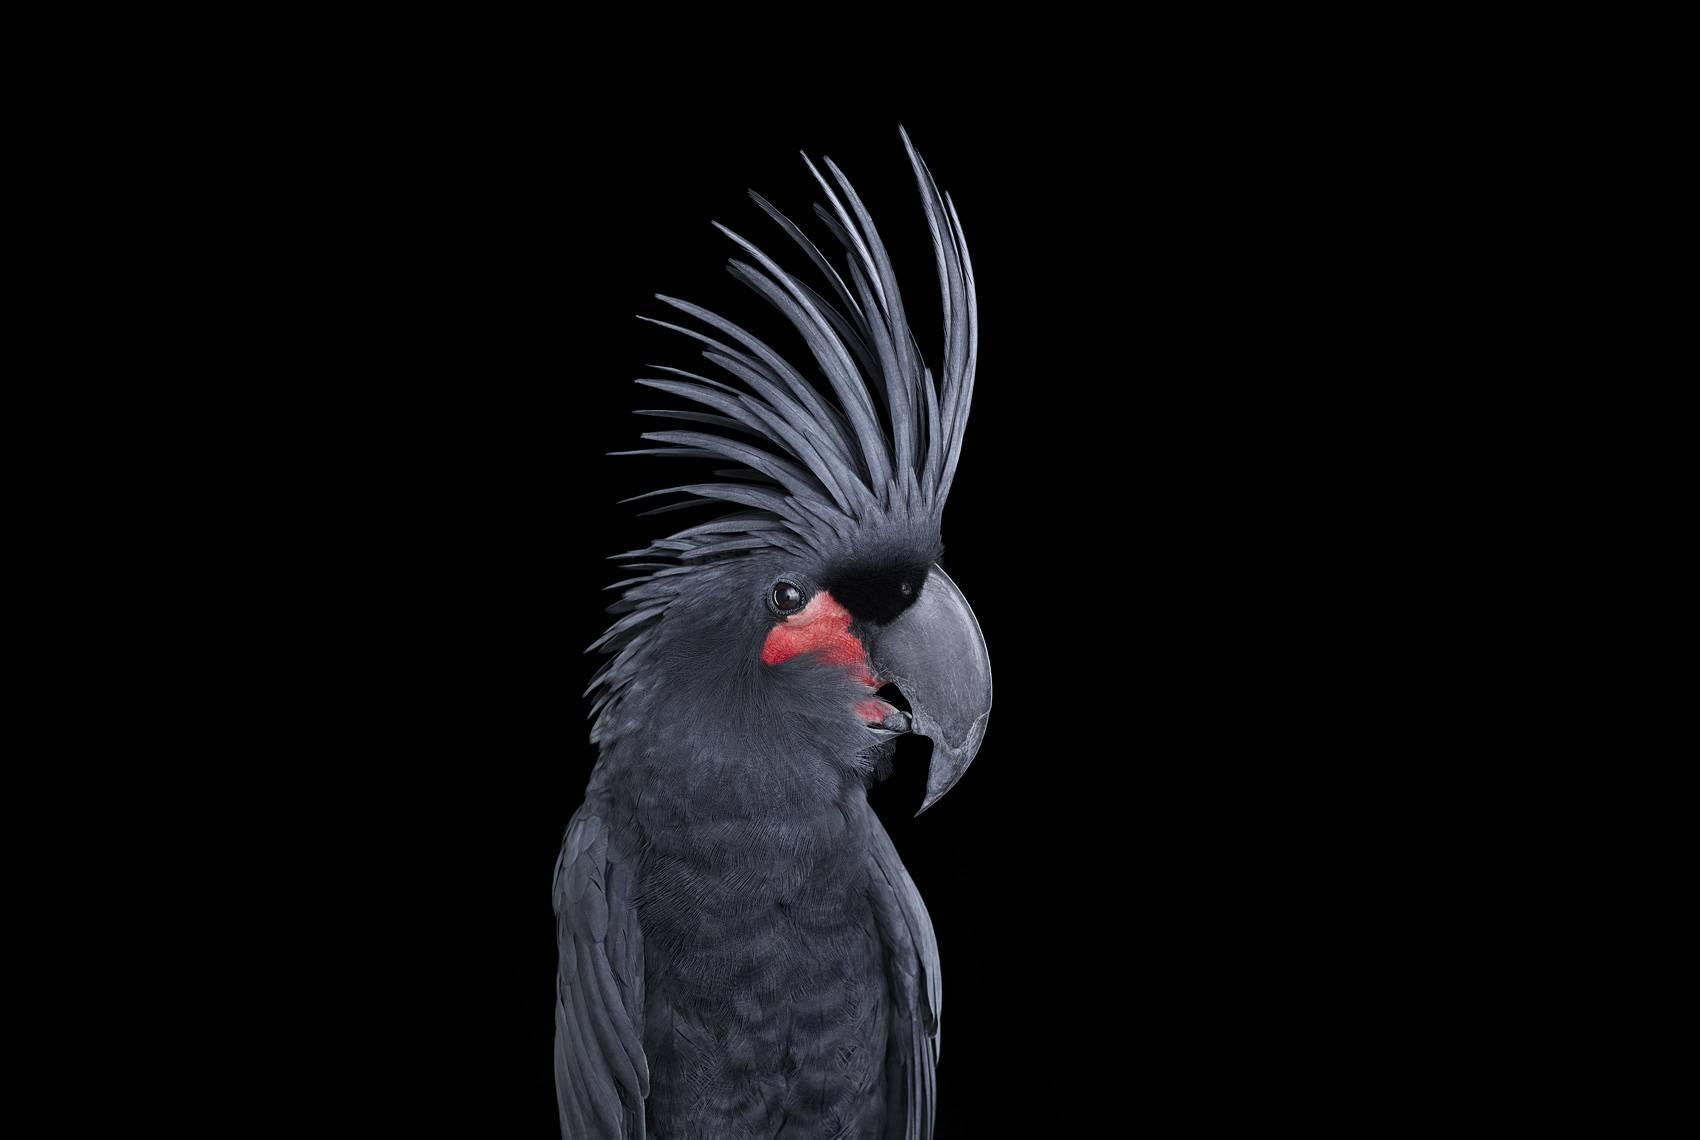 Brad Wilson Color Photograph - Palm Cockatoo #1, Los Angeles, CA, 2016